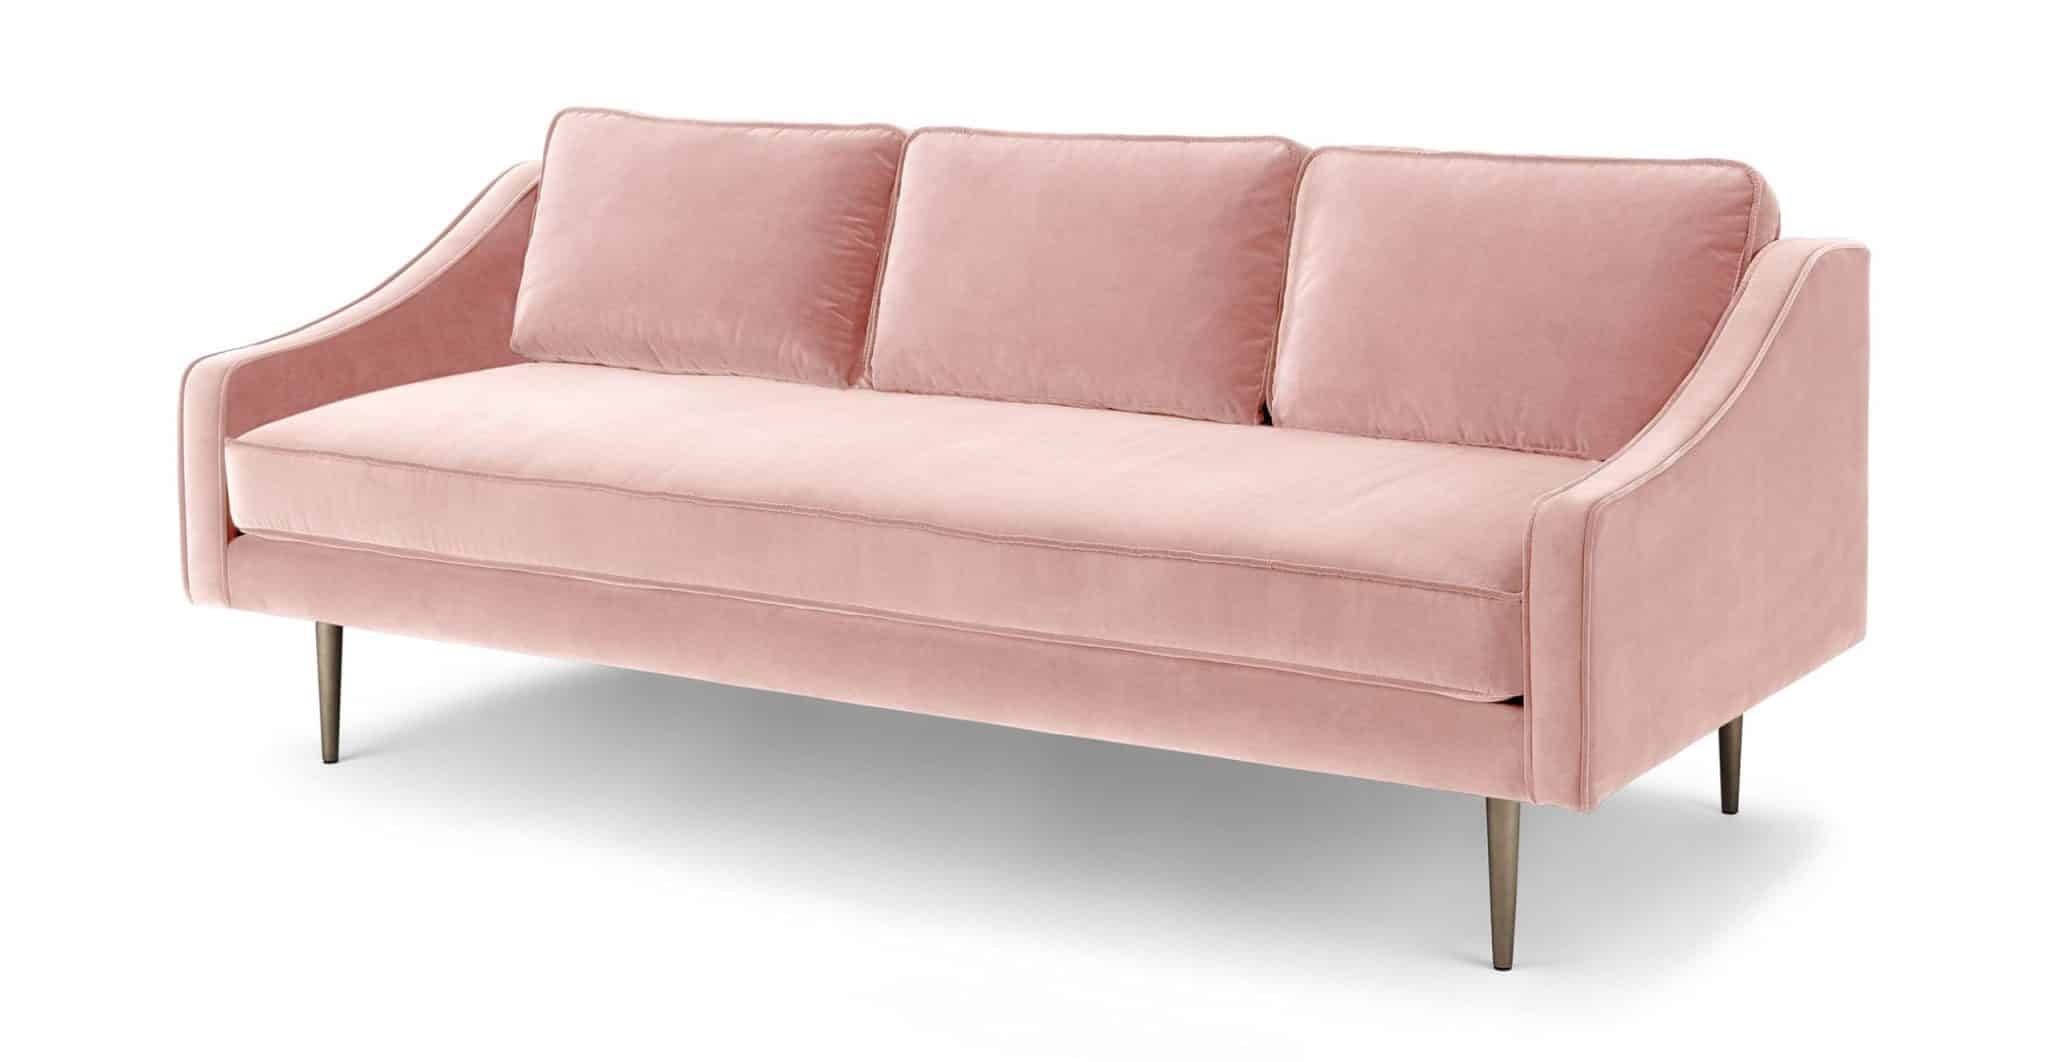 Mide century style Contemp blush pink sofa